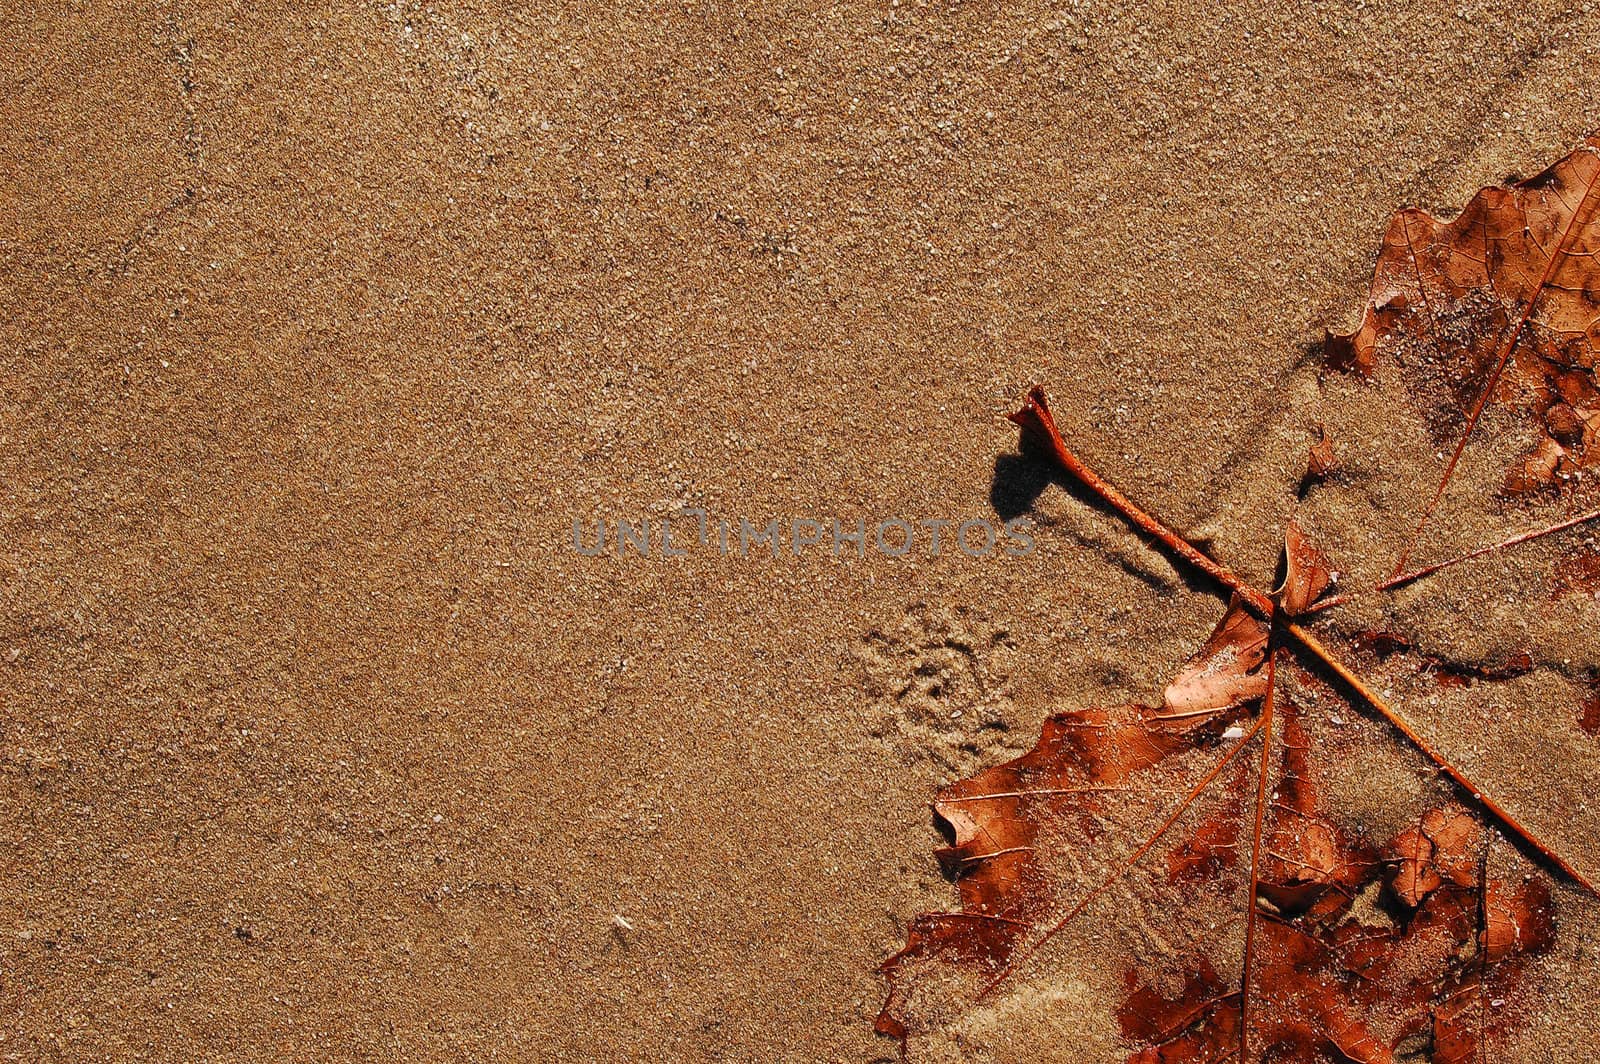 Still life leave and sand by carloscastilla